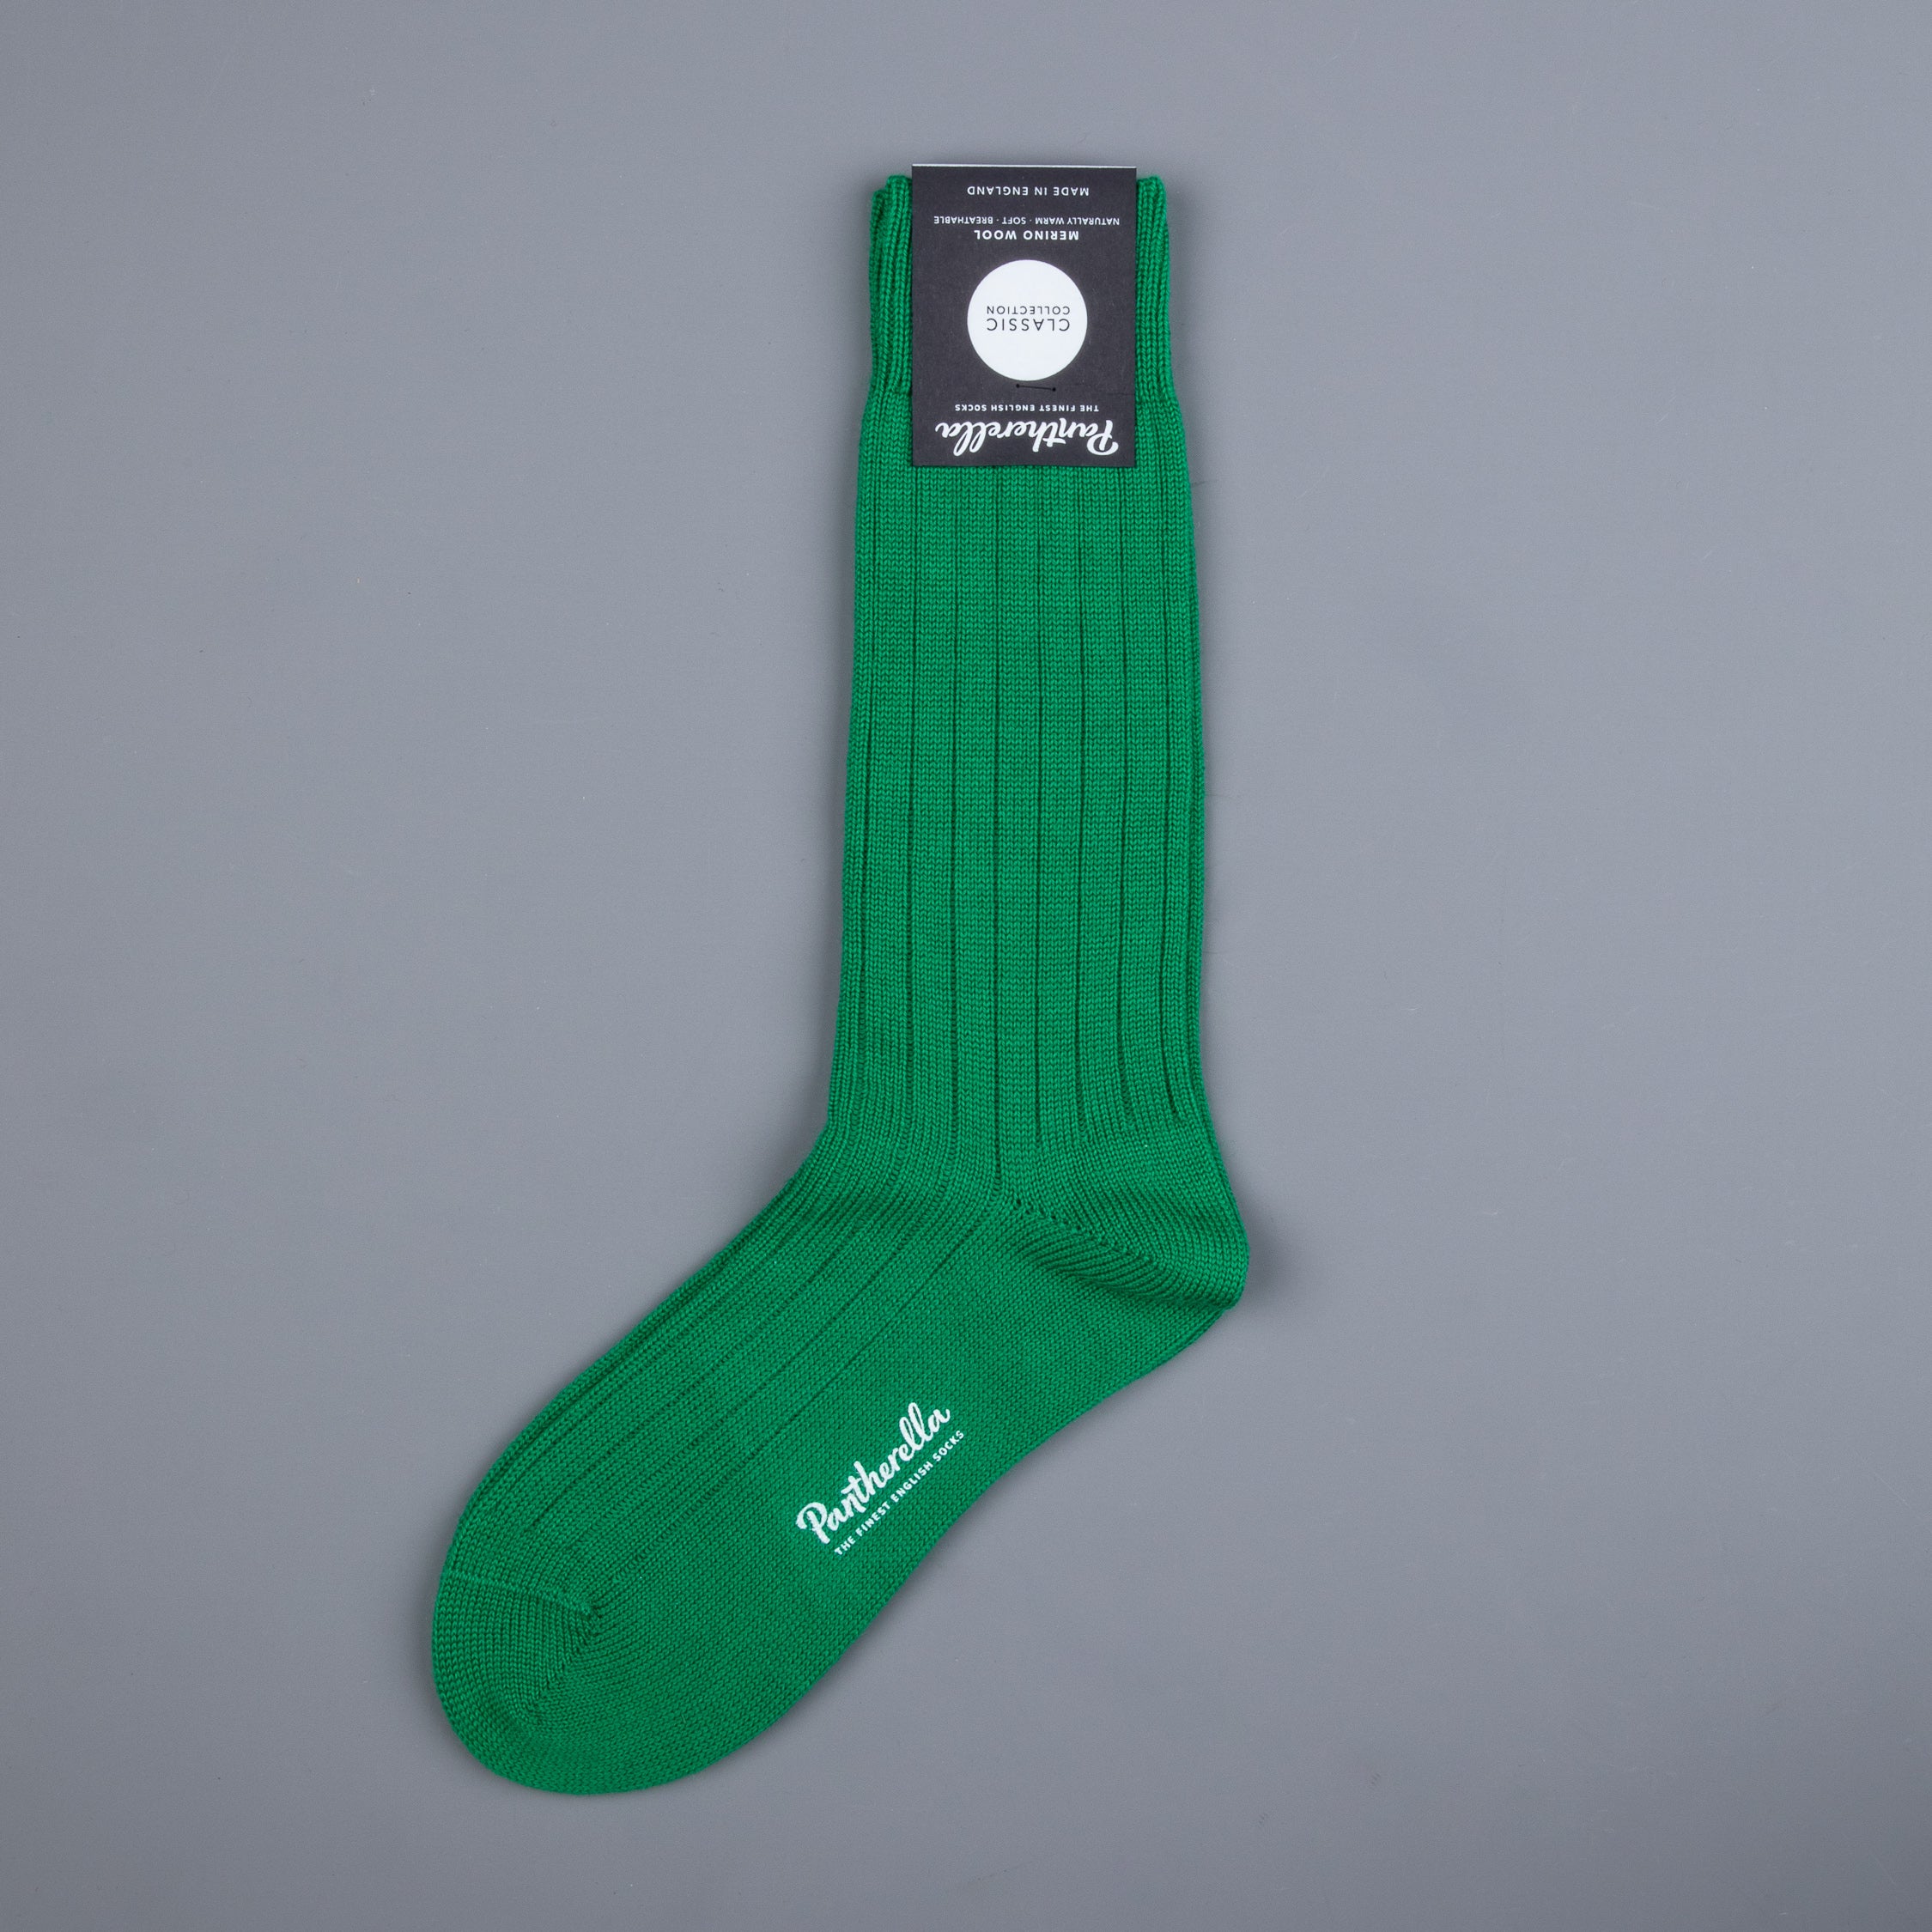 Frans Boone x Pantherella Packington Merino wool socks Emerald